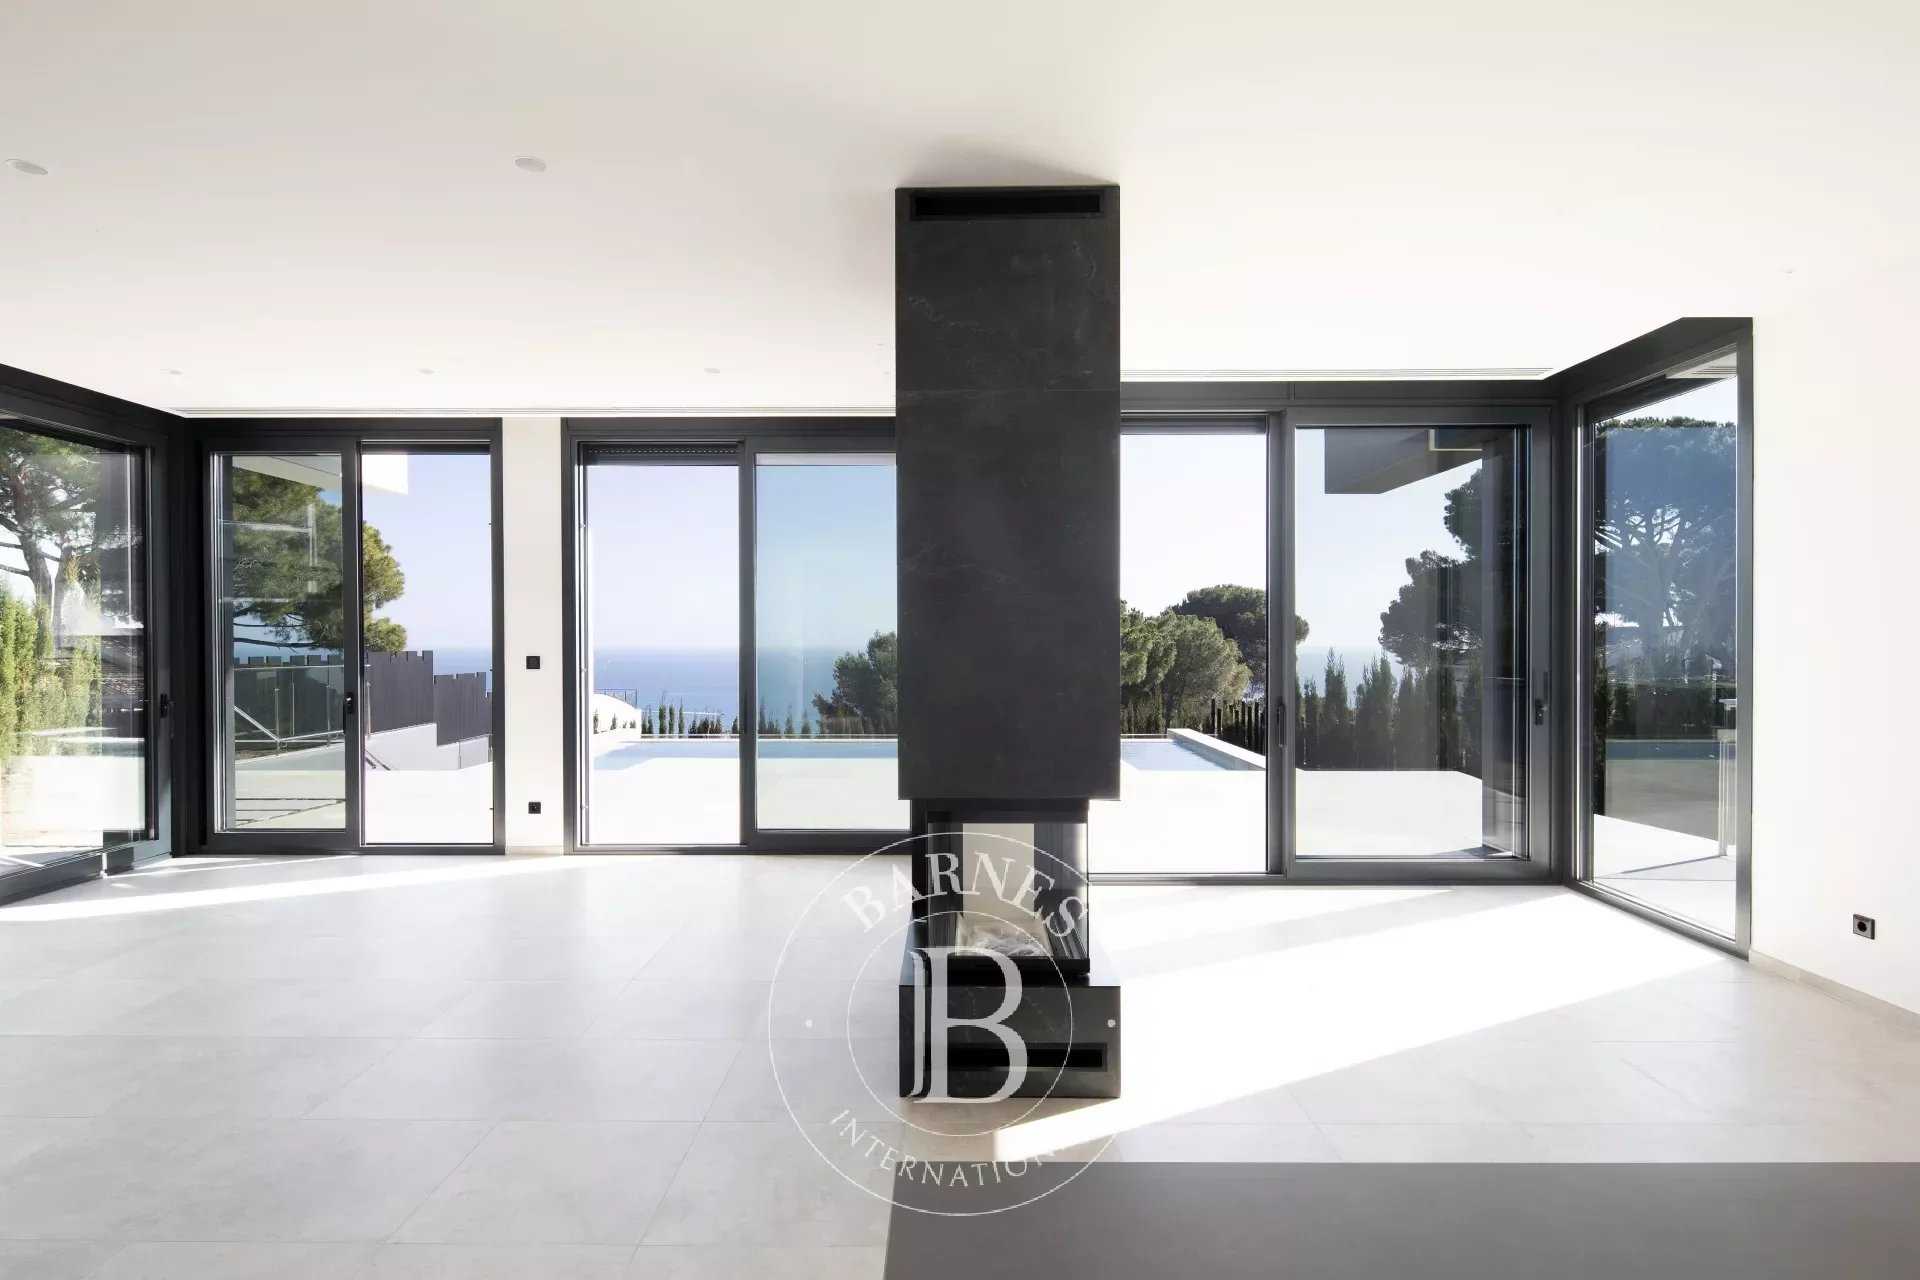 Preciosa villa de obra nueva en venta en Caldes d'Estrac, Barcelona. Caldes d'Estrac  -  ref 84539381 (picture 3)